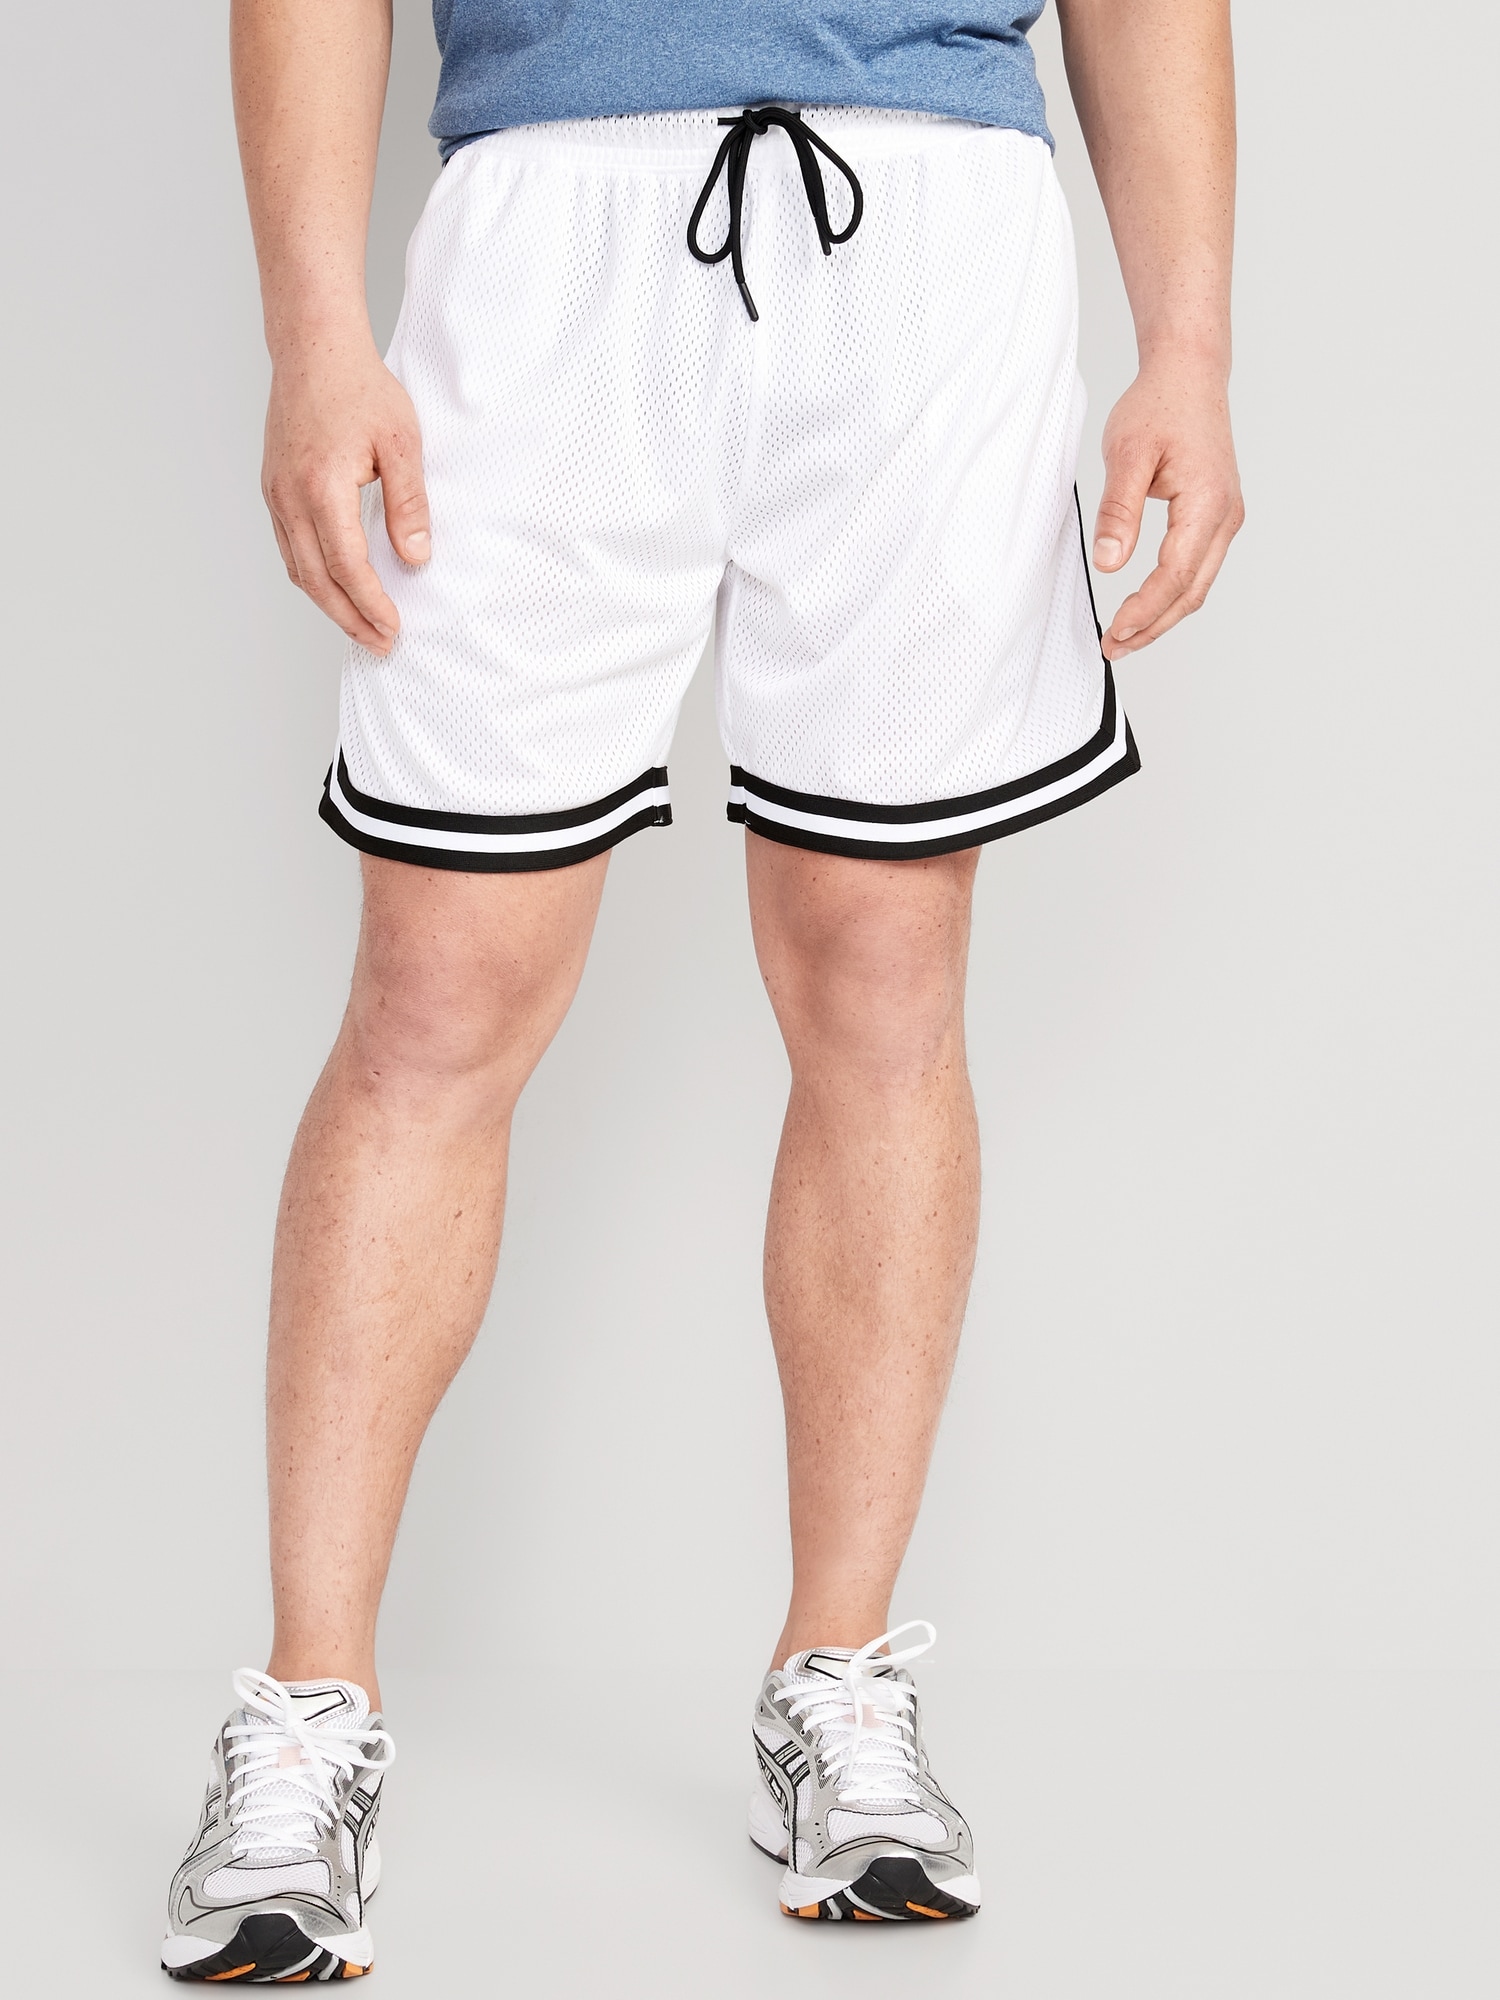 Old Navy Go-Dry Mesh Basketball Shorts for Men -- 7-inch inseam white. 1